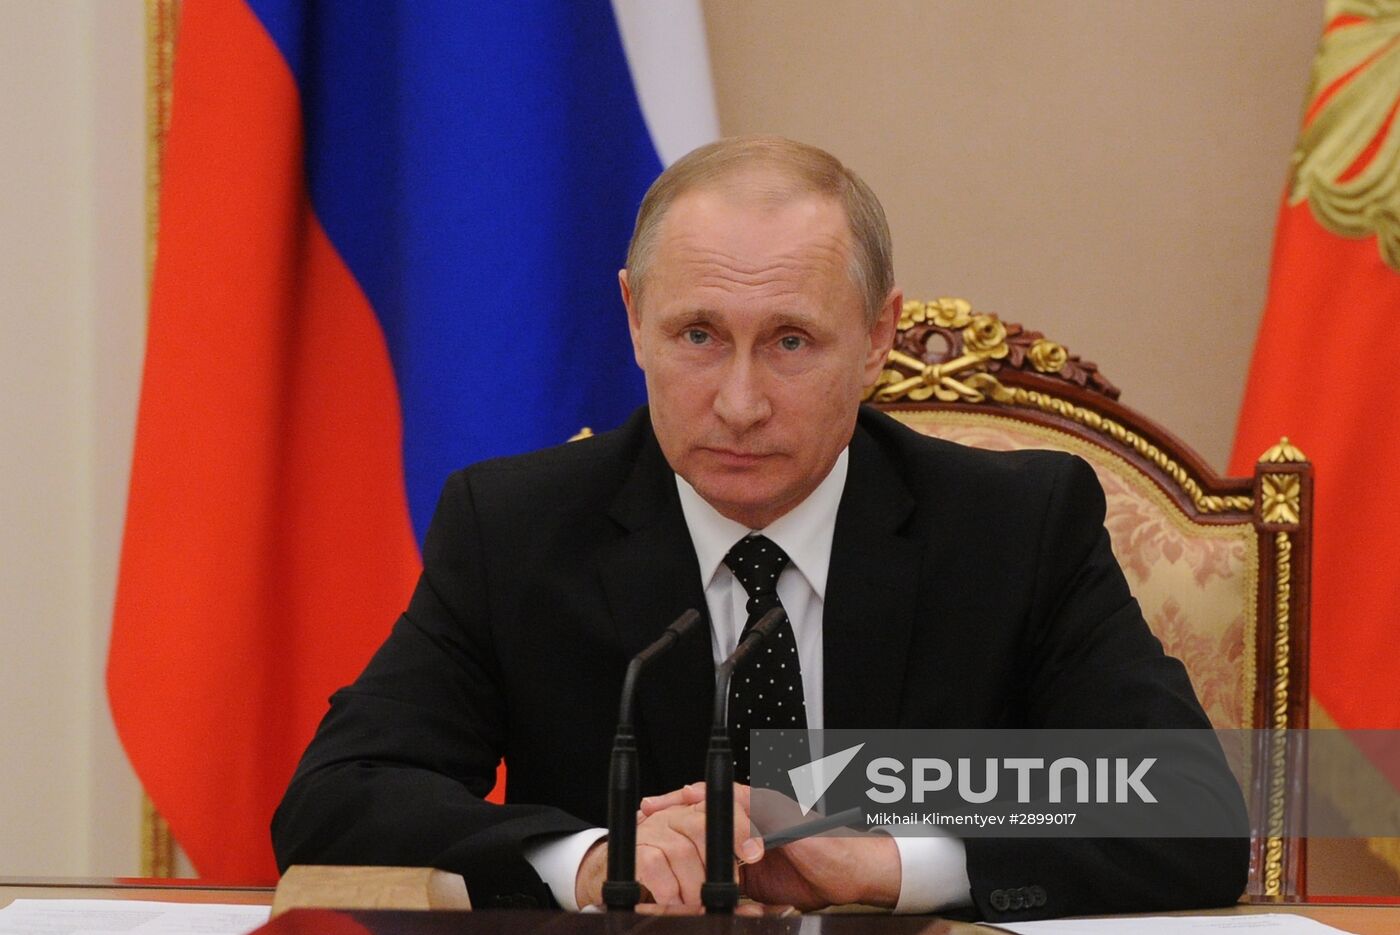 Russian President Vladimir Putin chairs Security Council meeting